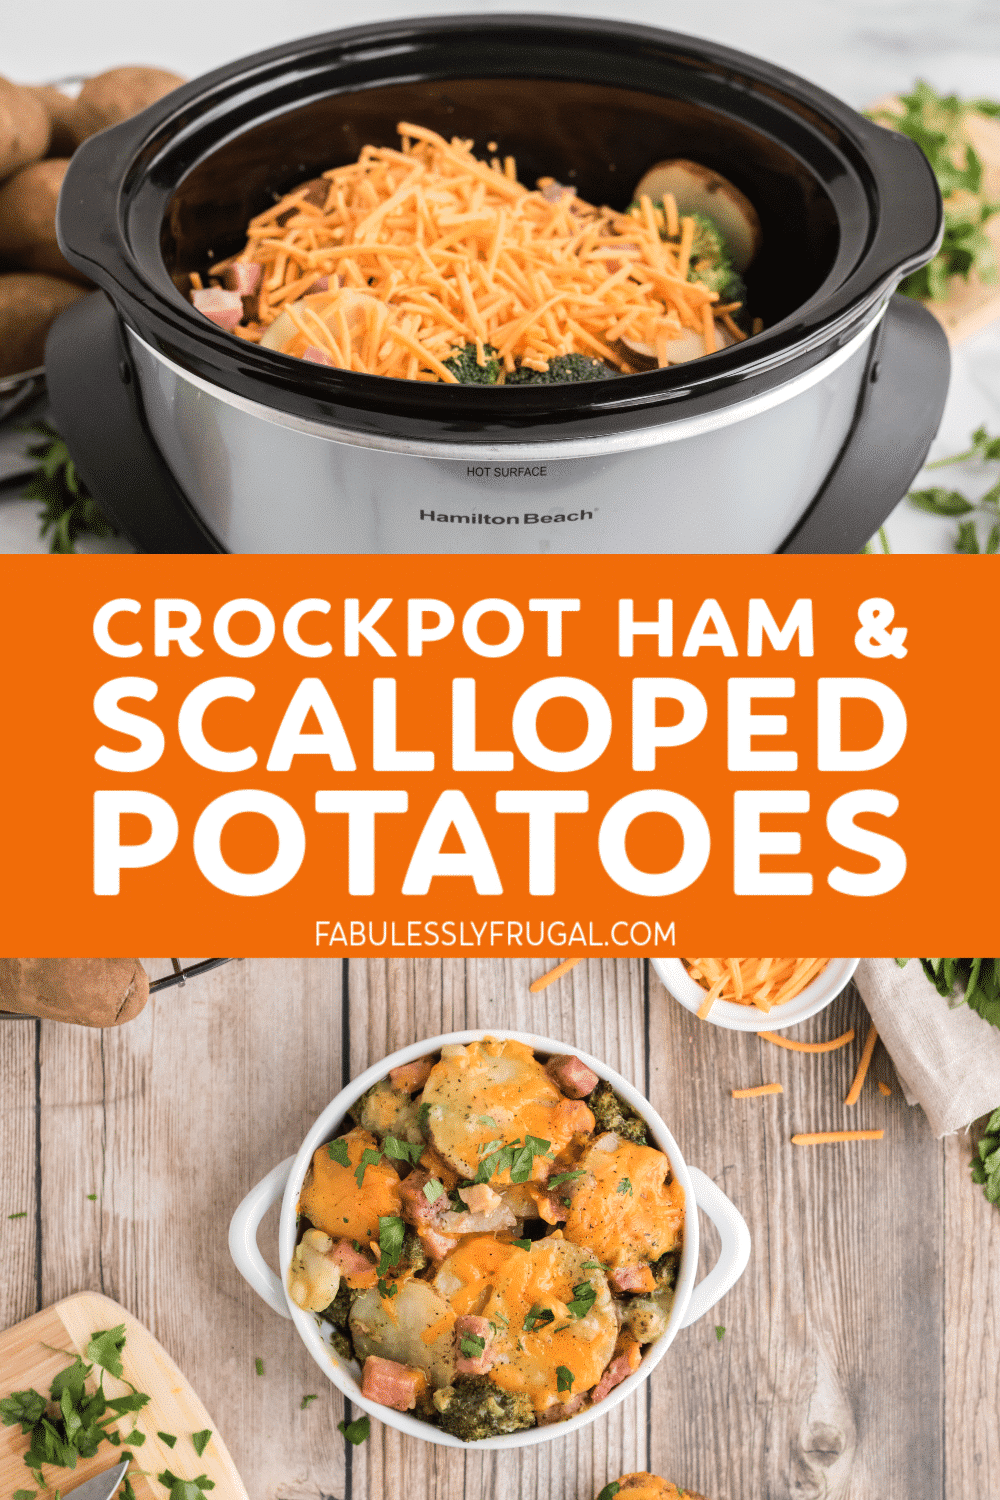 Crockpot ham and scalloped potatoes